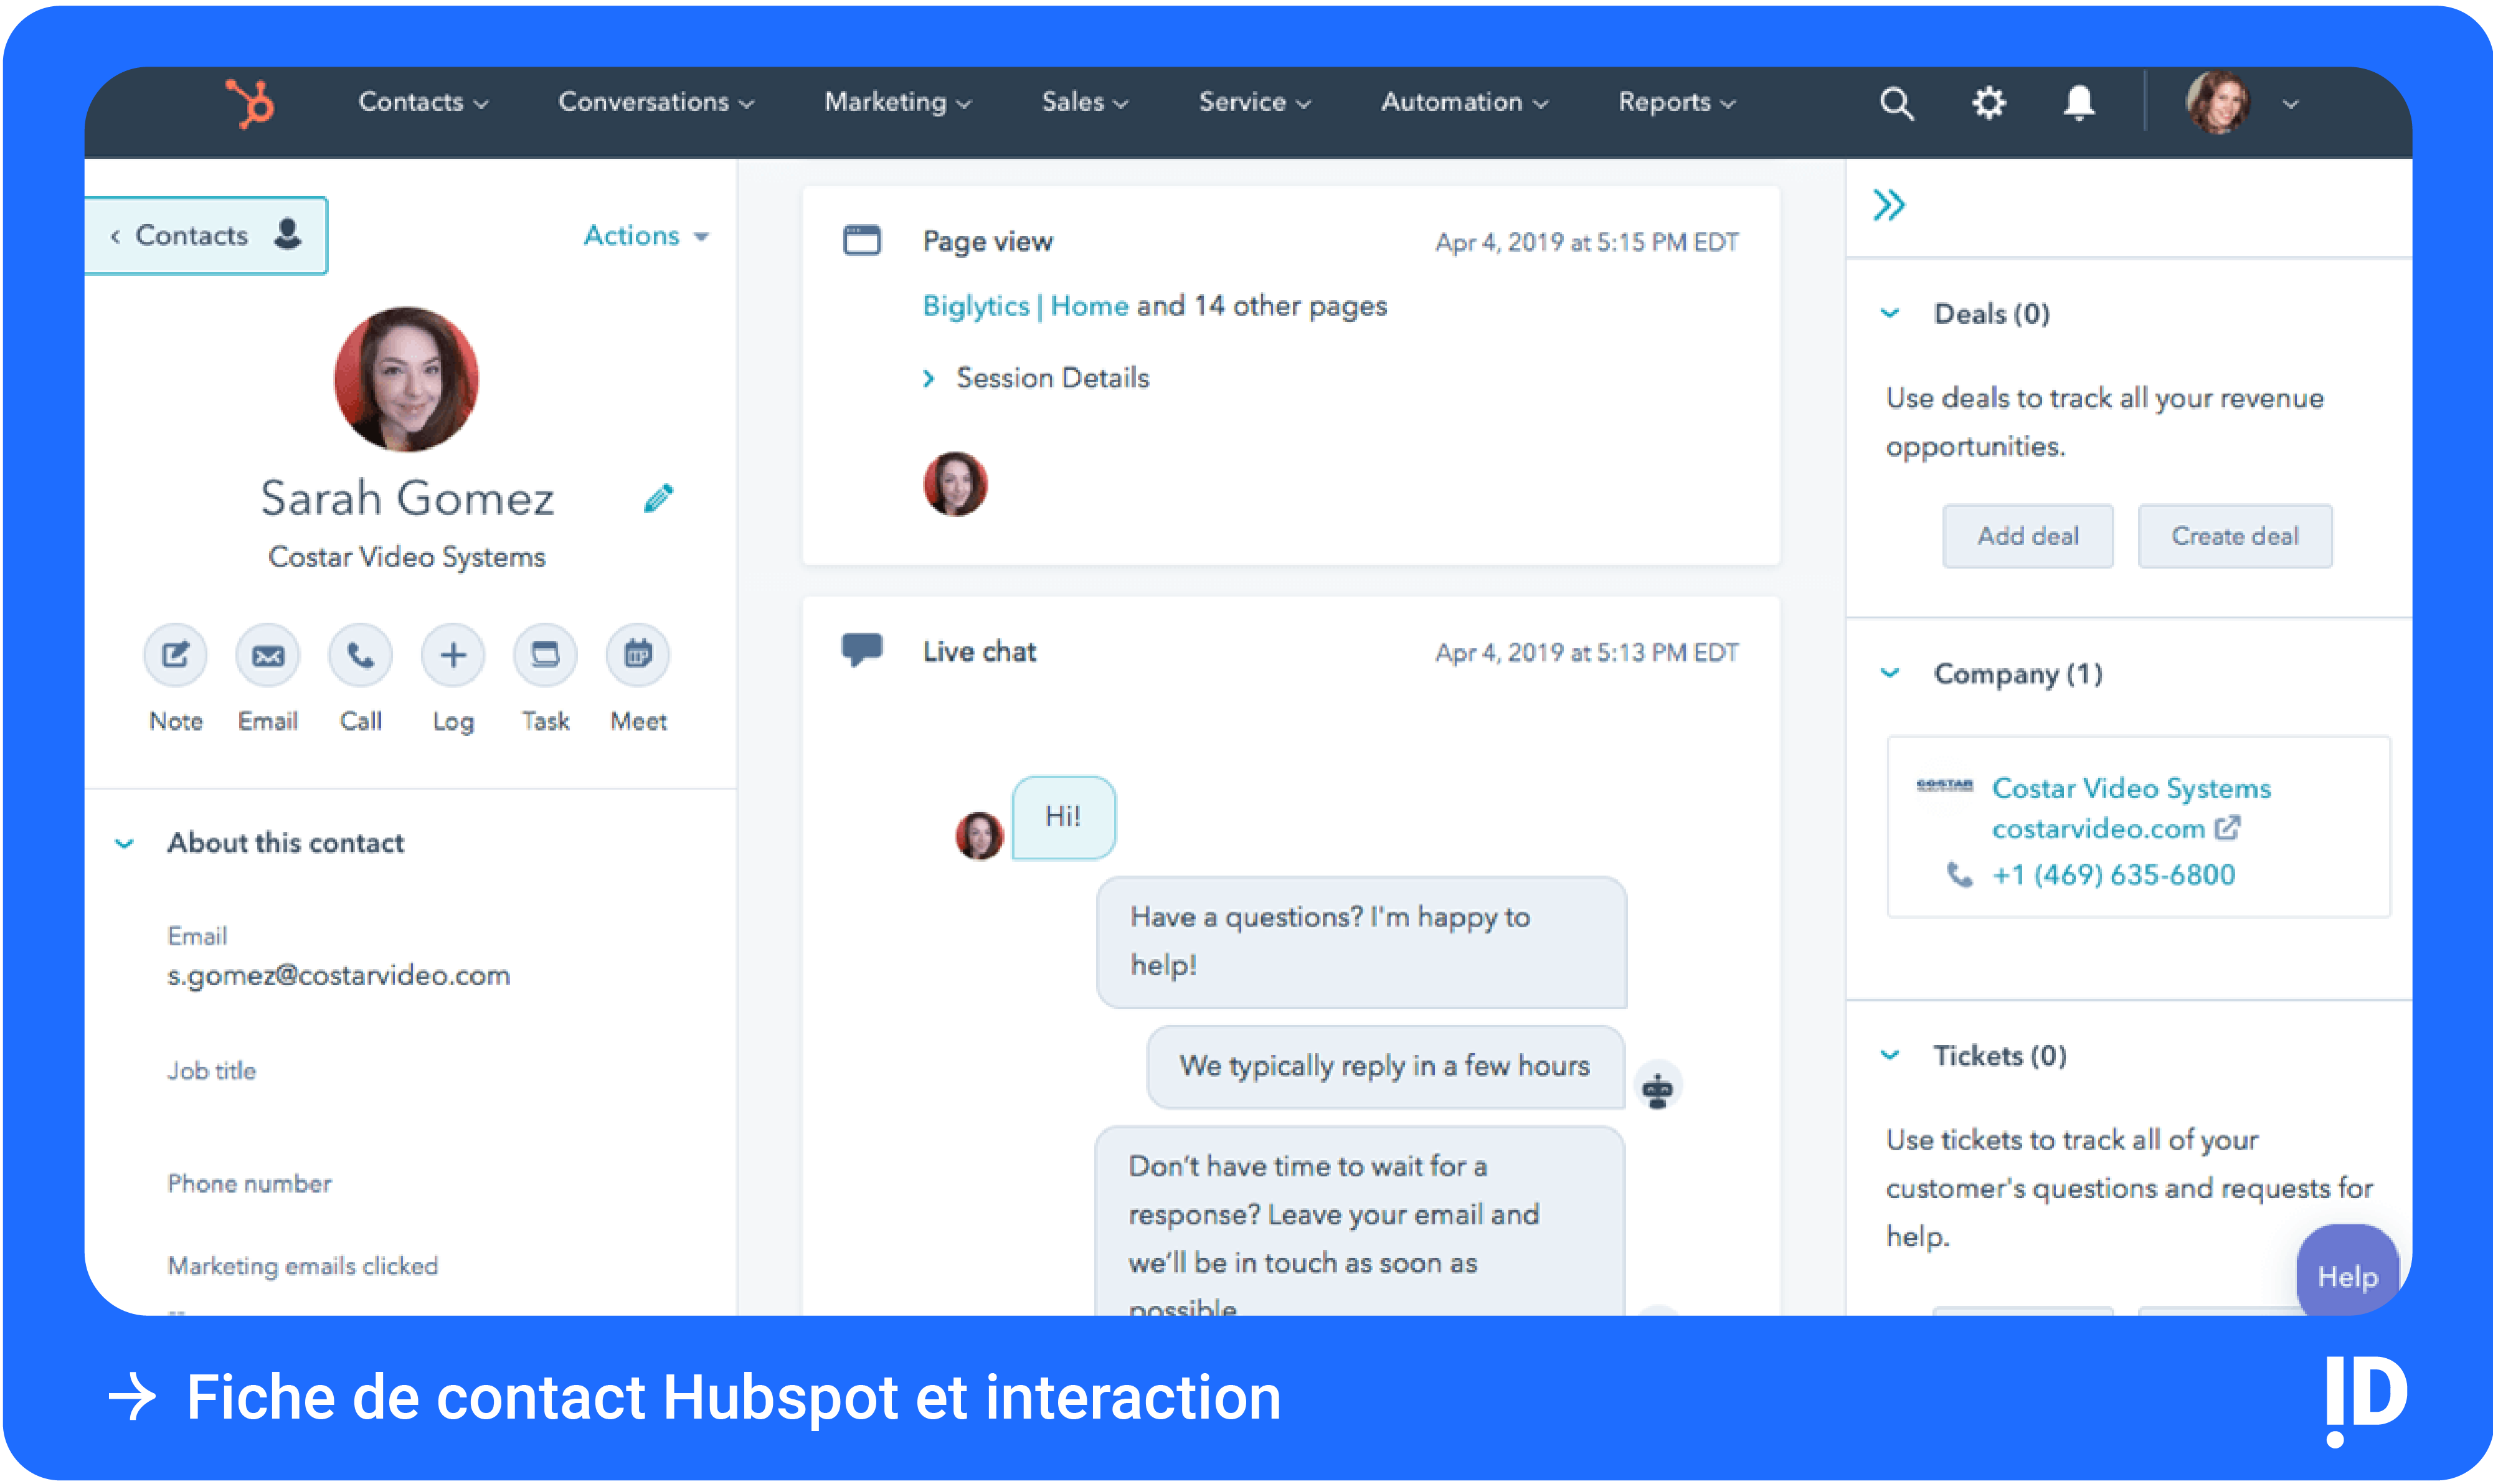 Fiche de contact Hubspot et interaction